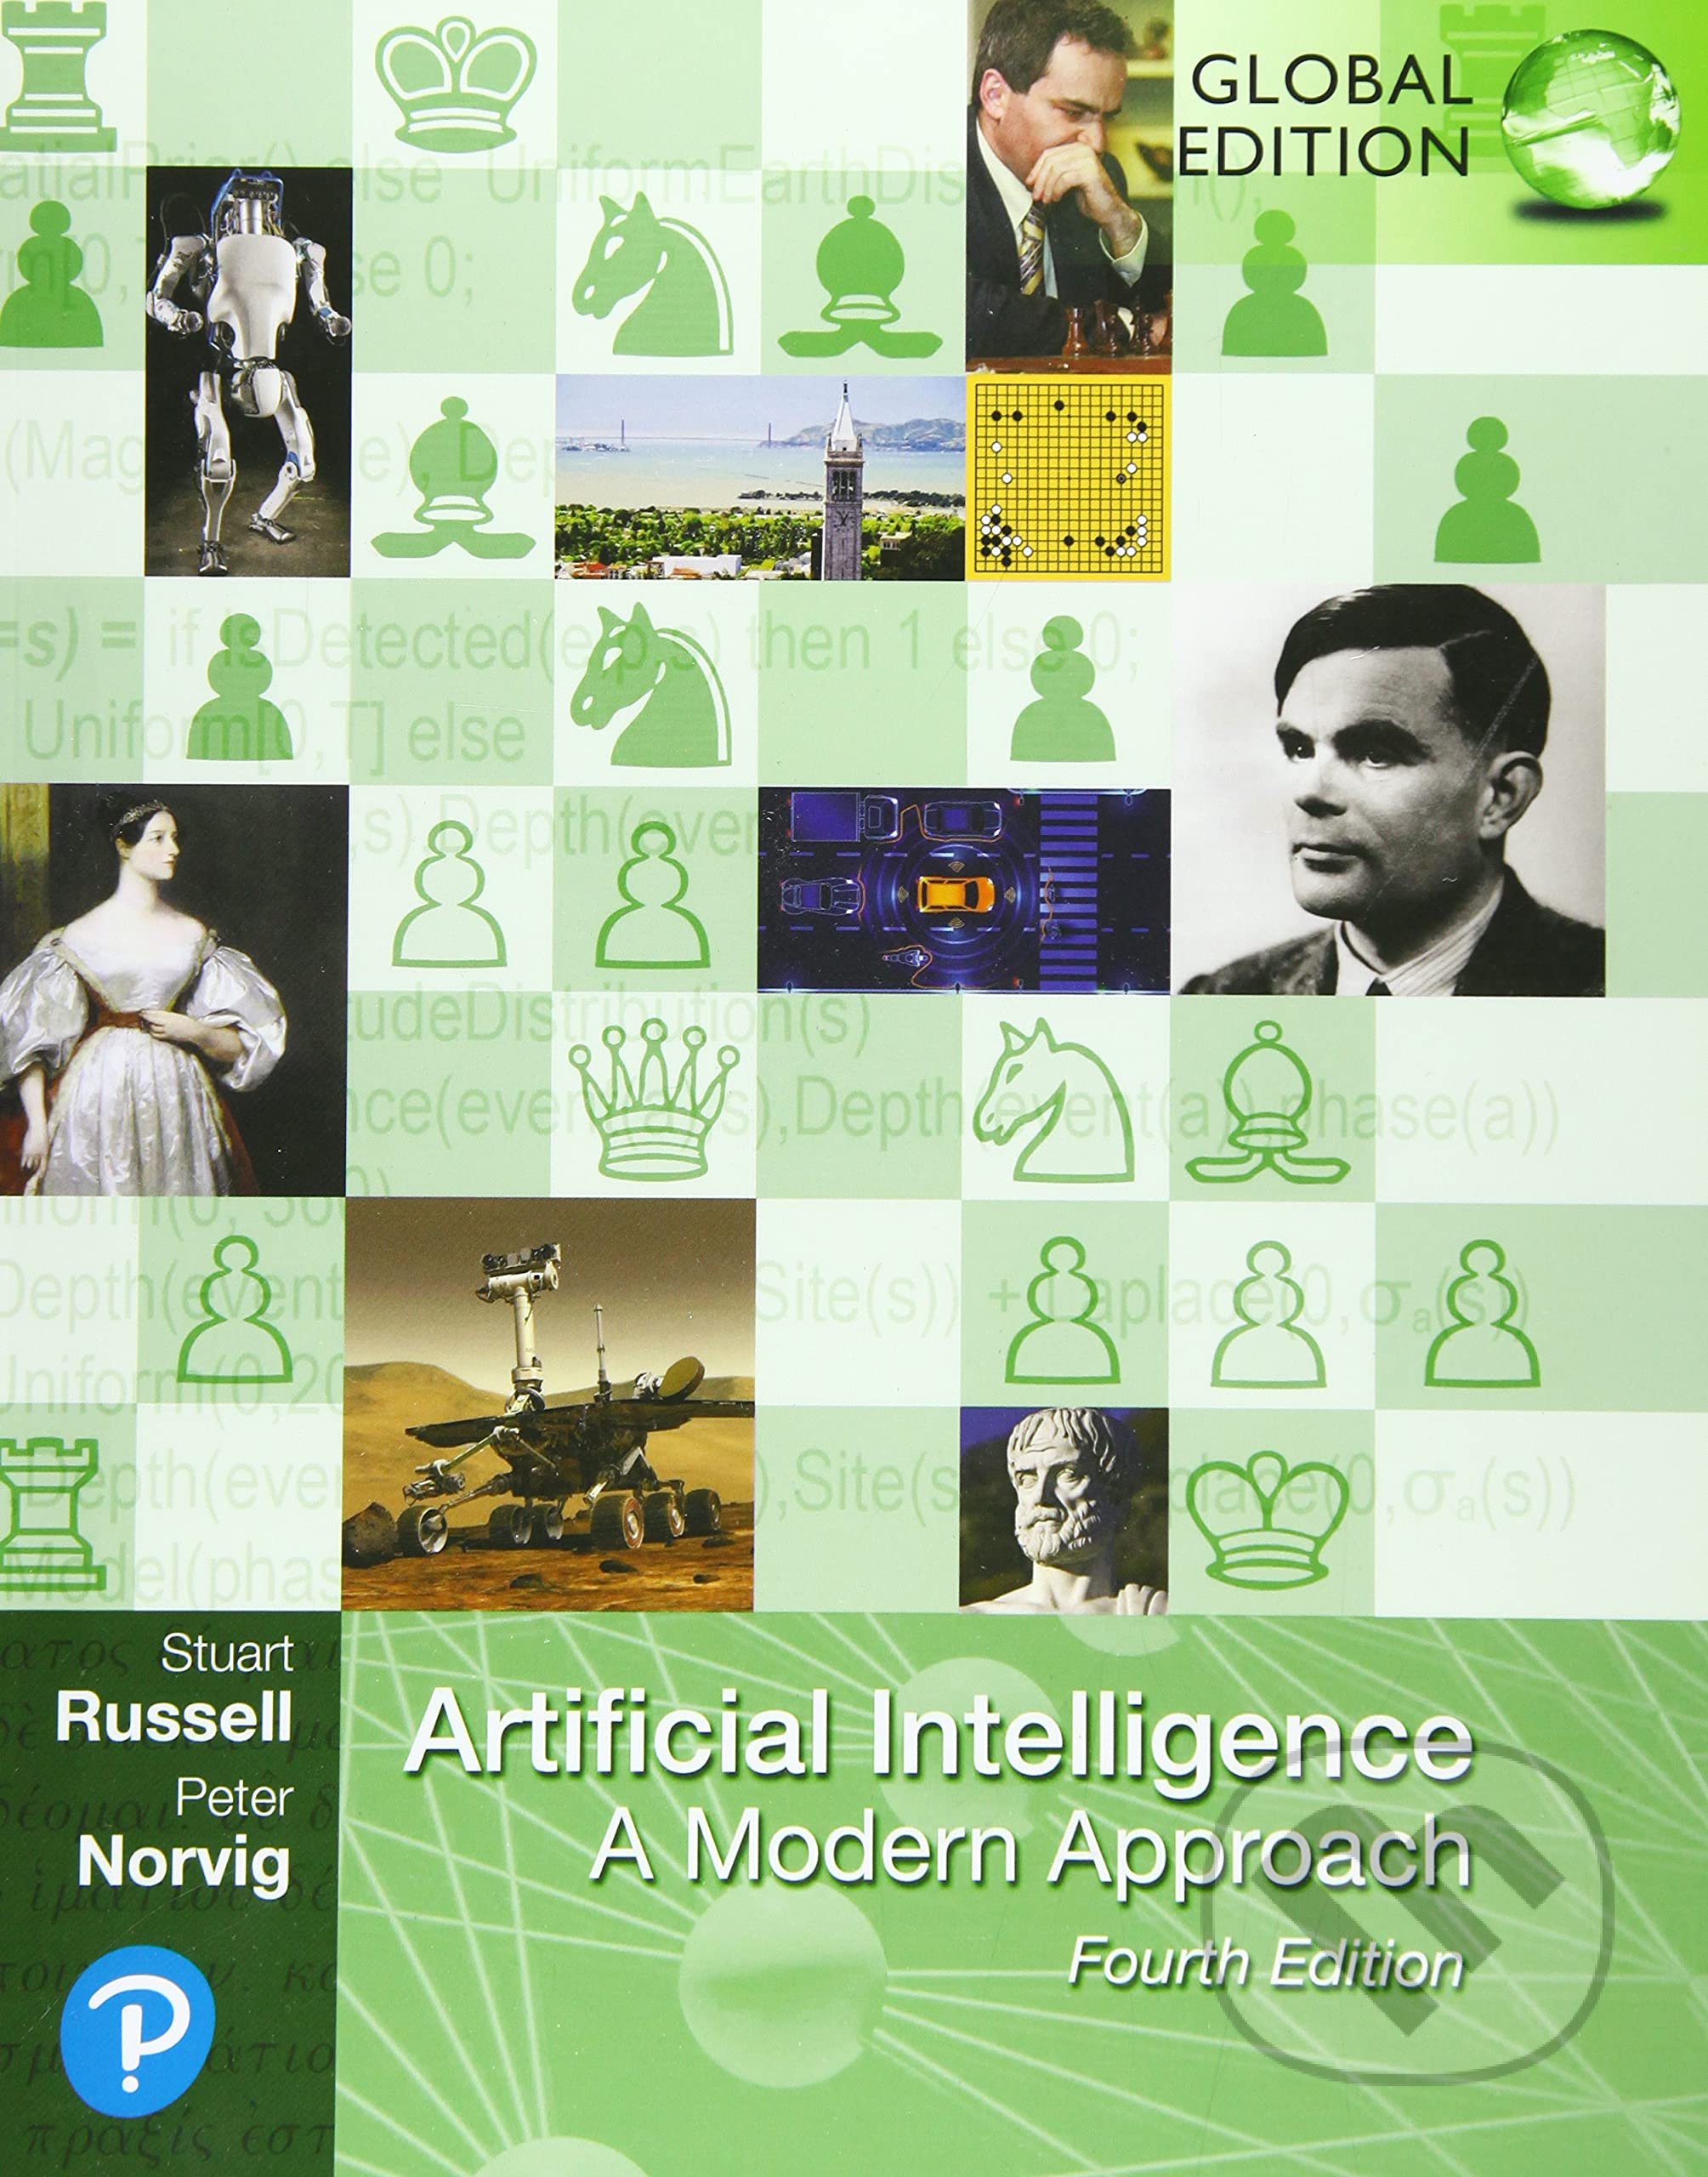 Artificial Intelligence: A Modern Approach - Stuart Russell, Peter Norvig, Pearson, 2021